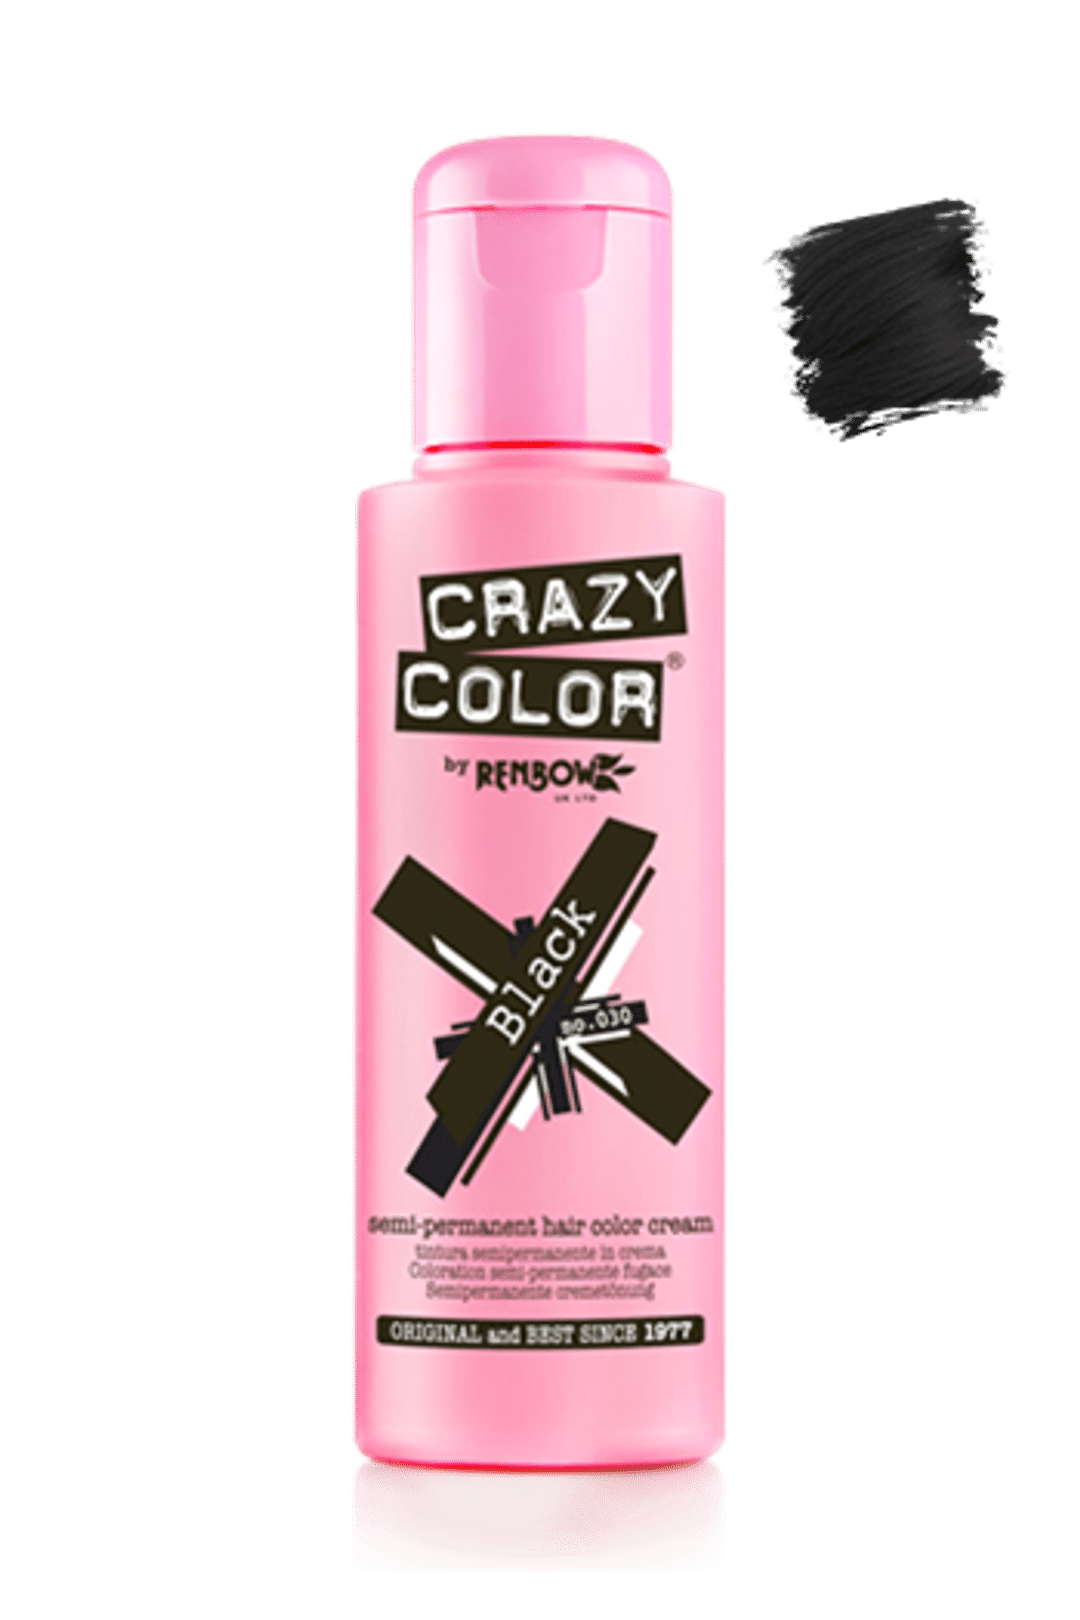 Crazy Color Semi Permanent Hair Color Cream - Black